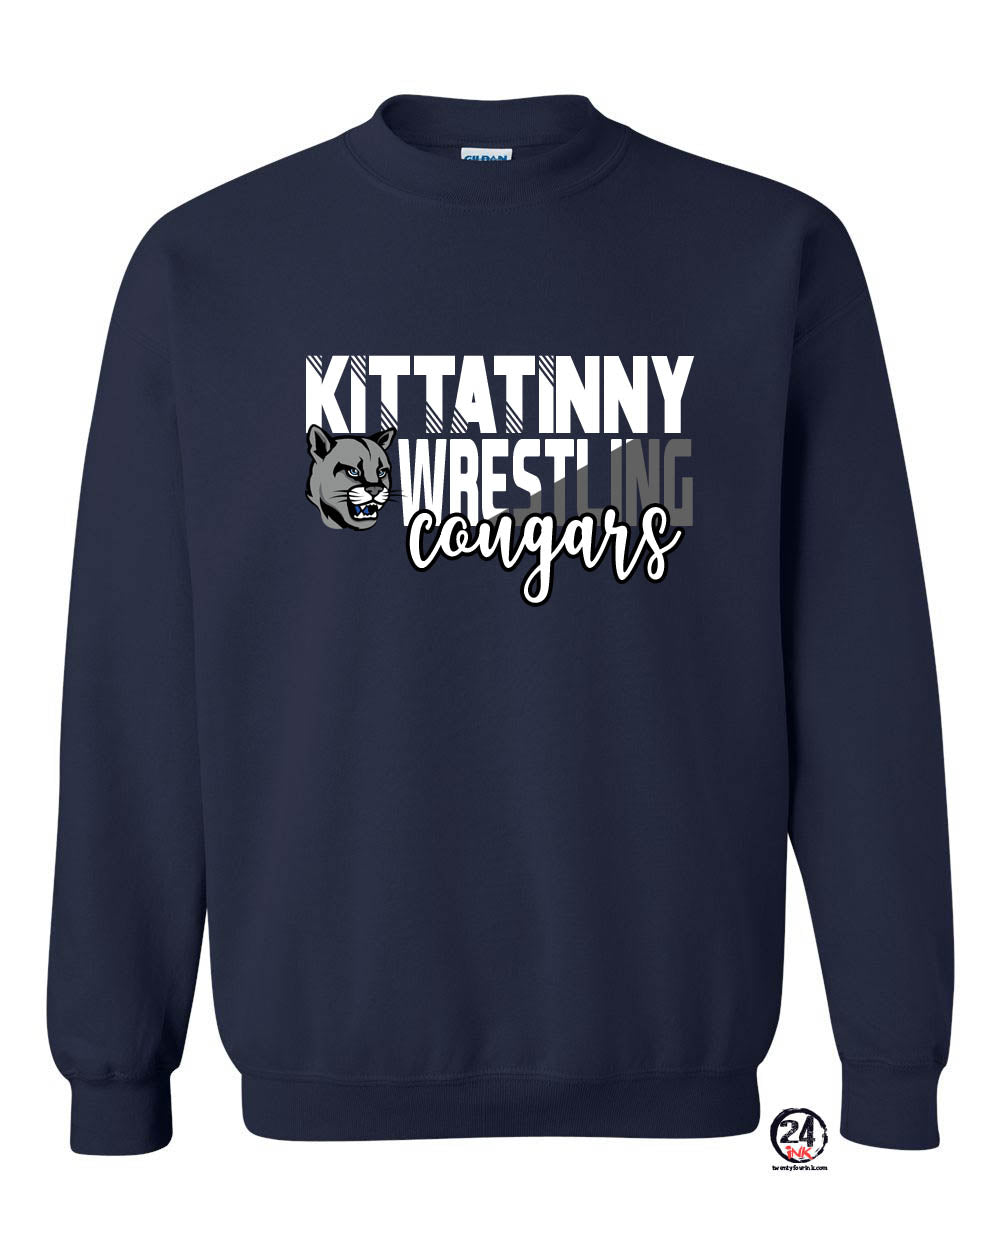 Kittatinny Wrestling Design 4 non hooded sweatshirt